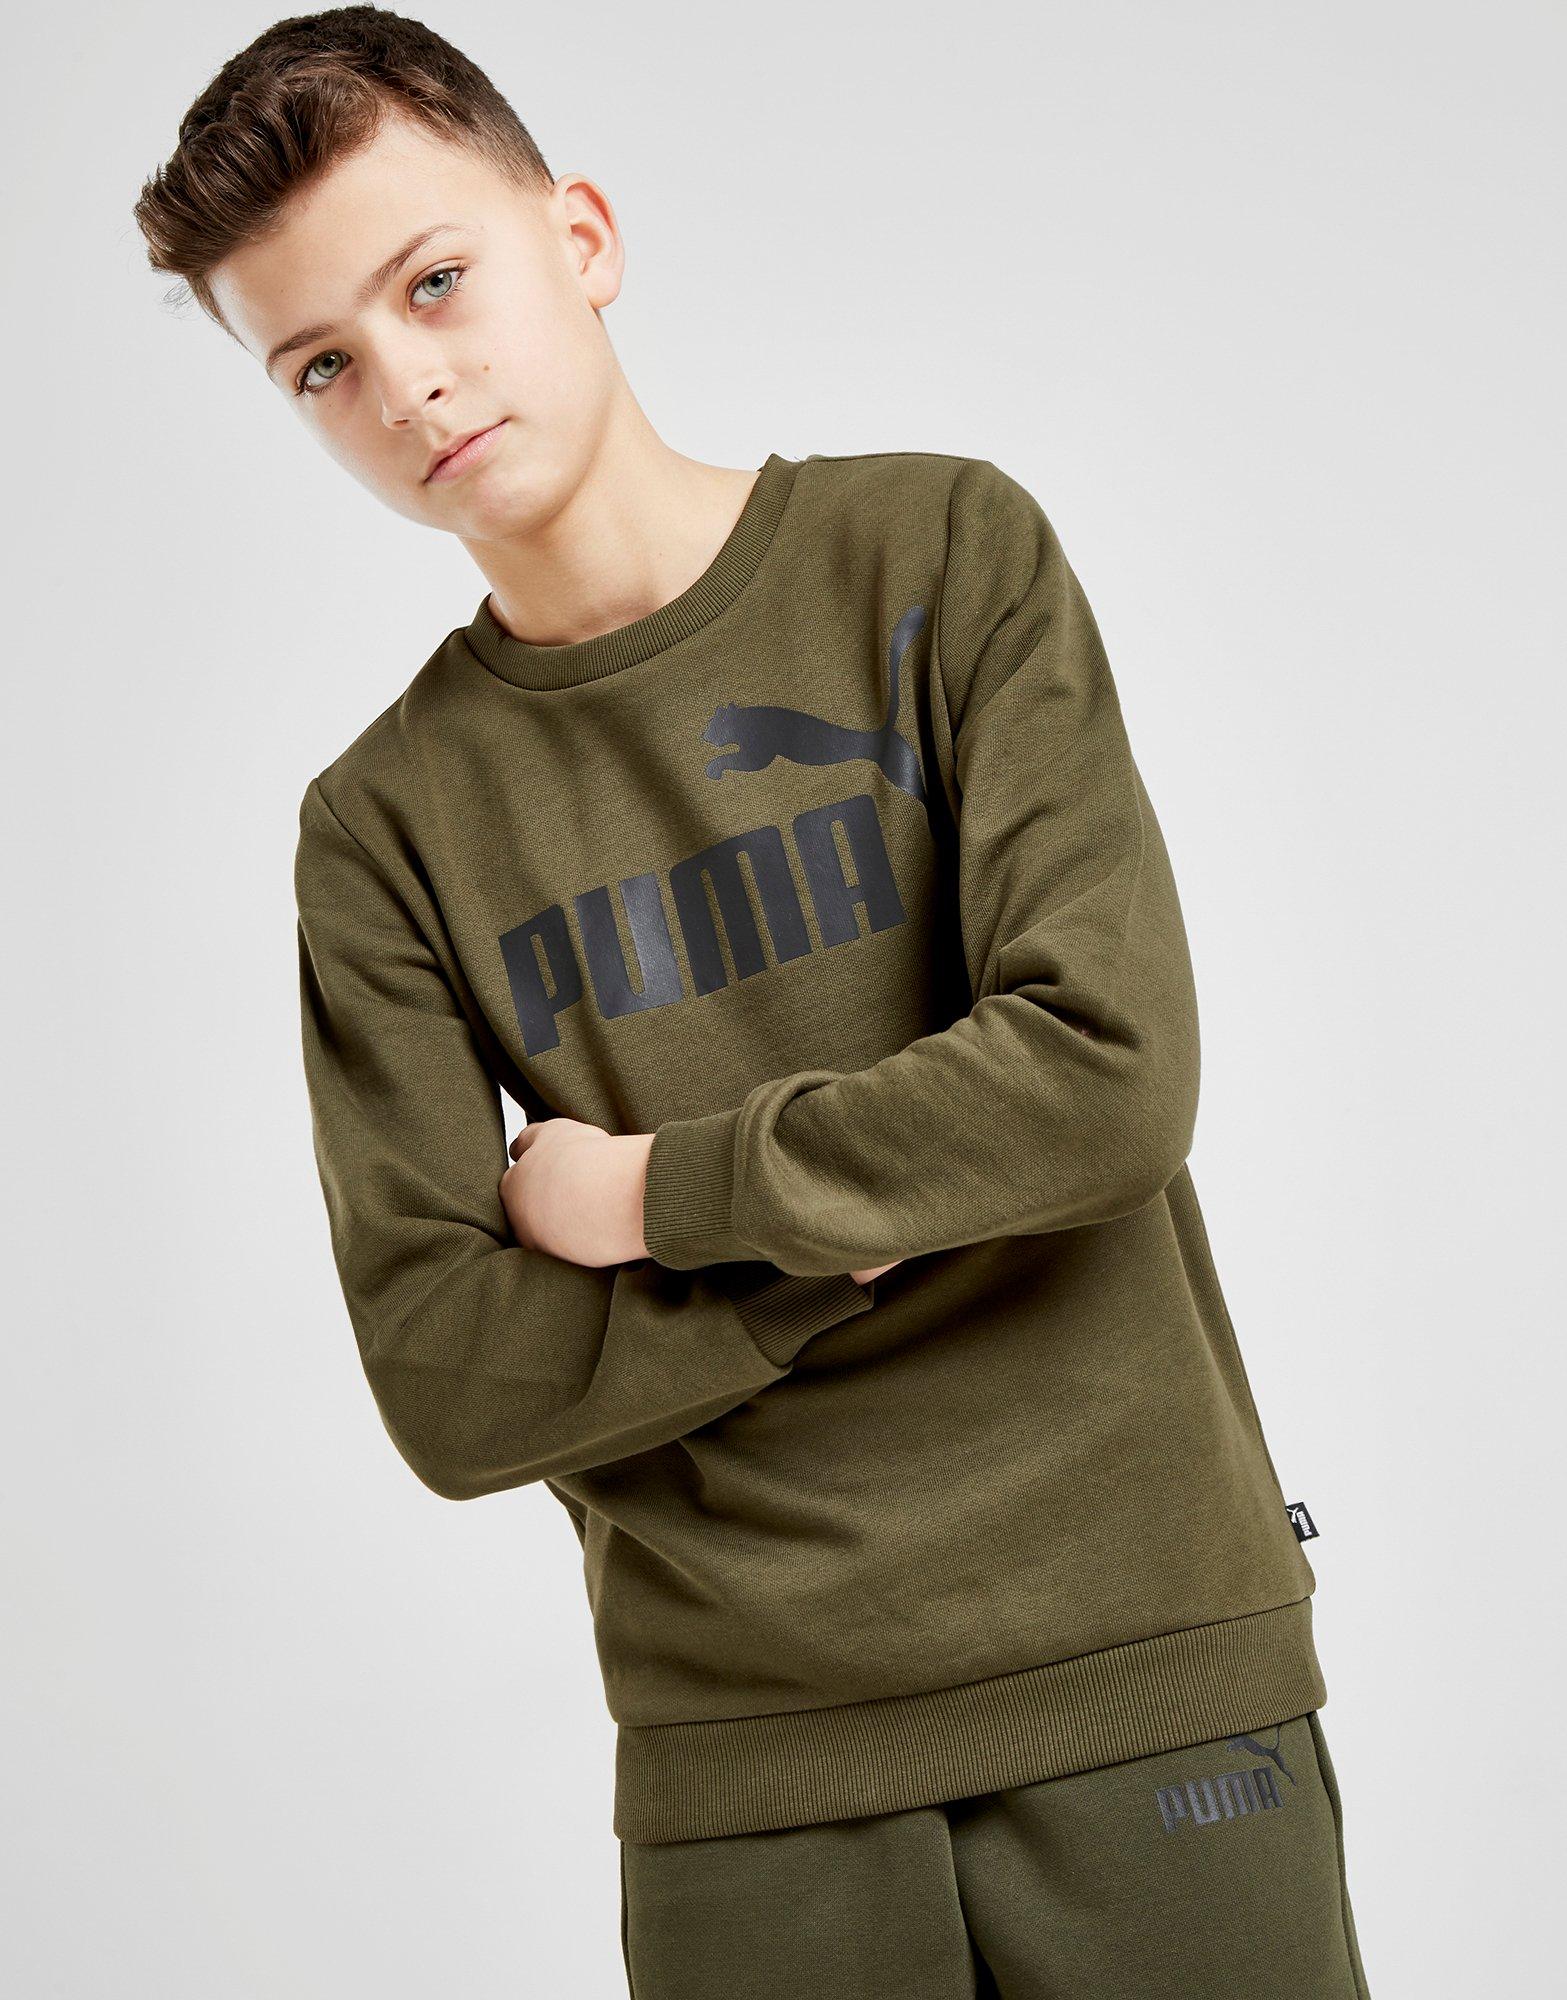 puma core logo sweatshirt